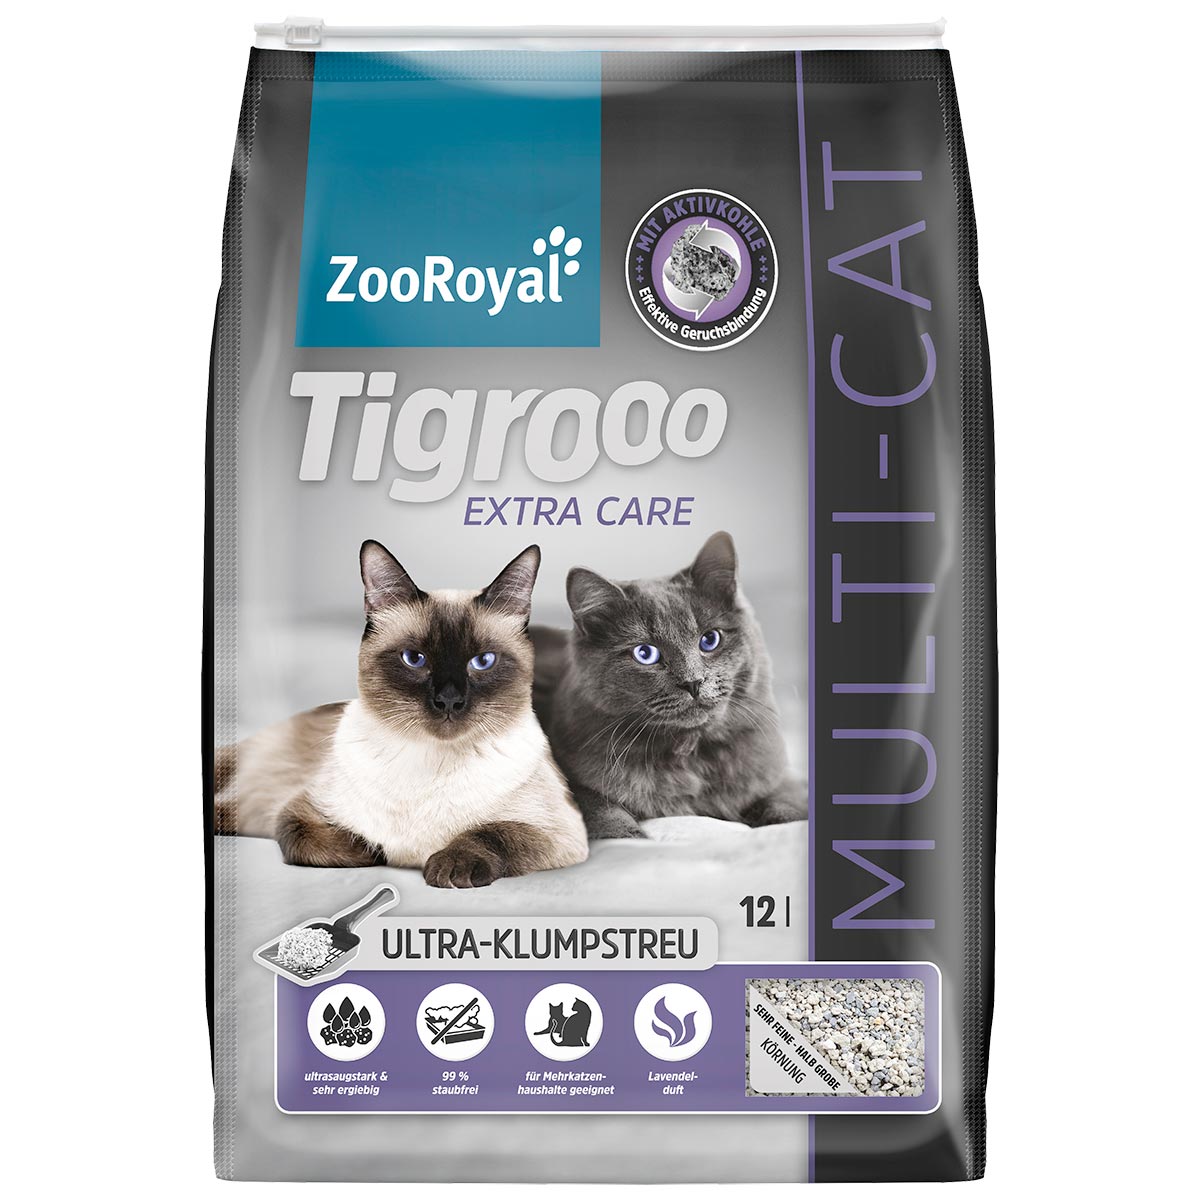 ZooRoyal Tigrooo Multi-Cat 12l von ZooRoyal Tigrooo